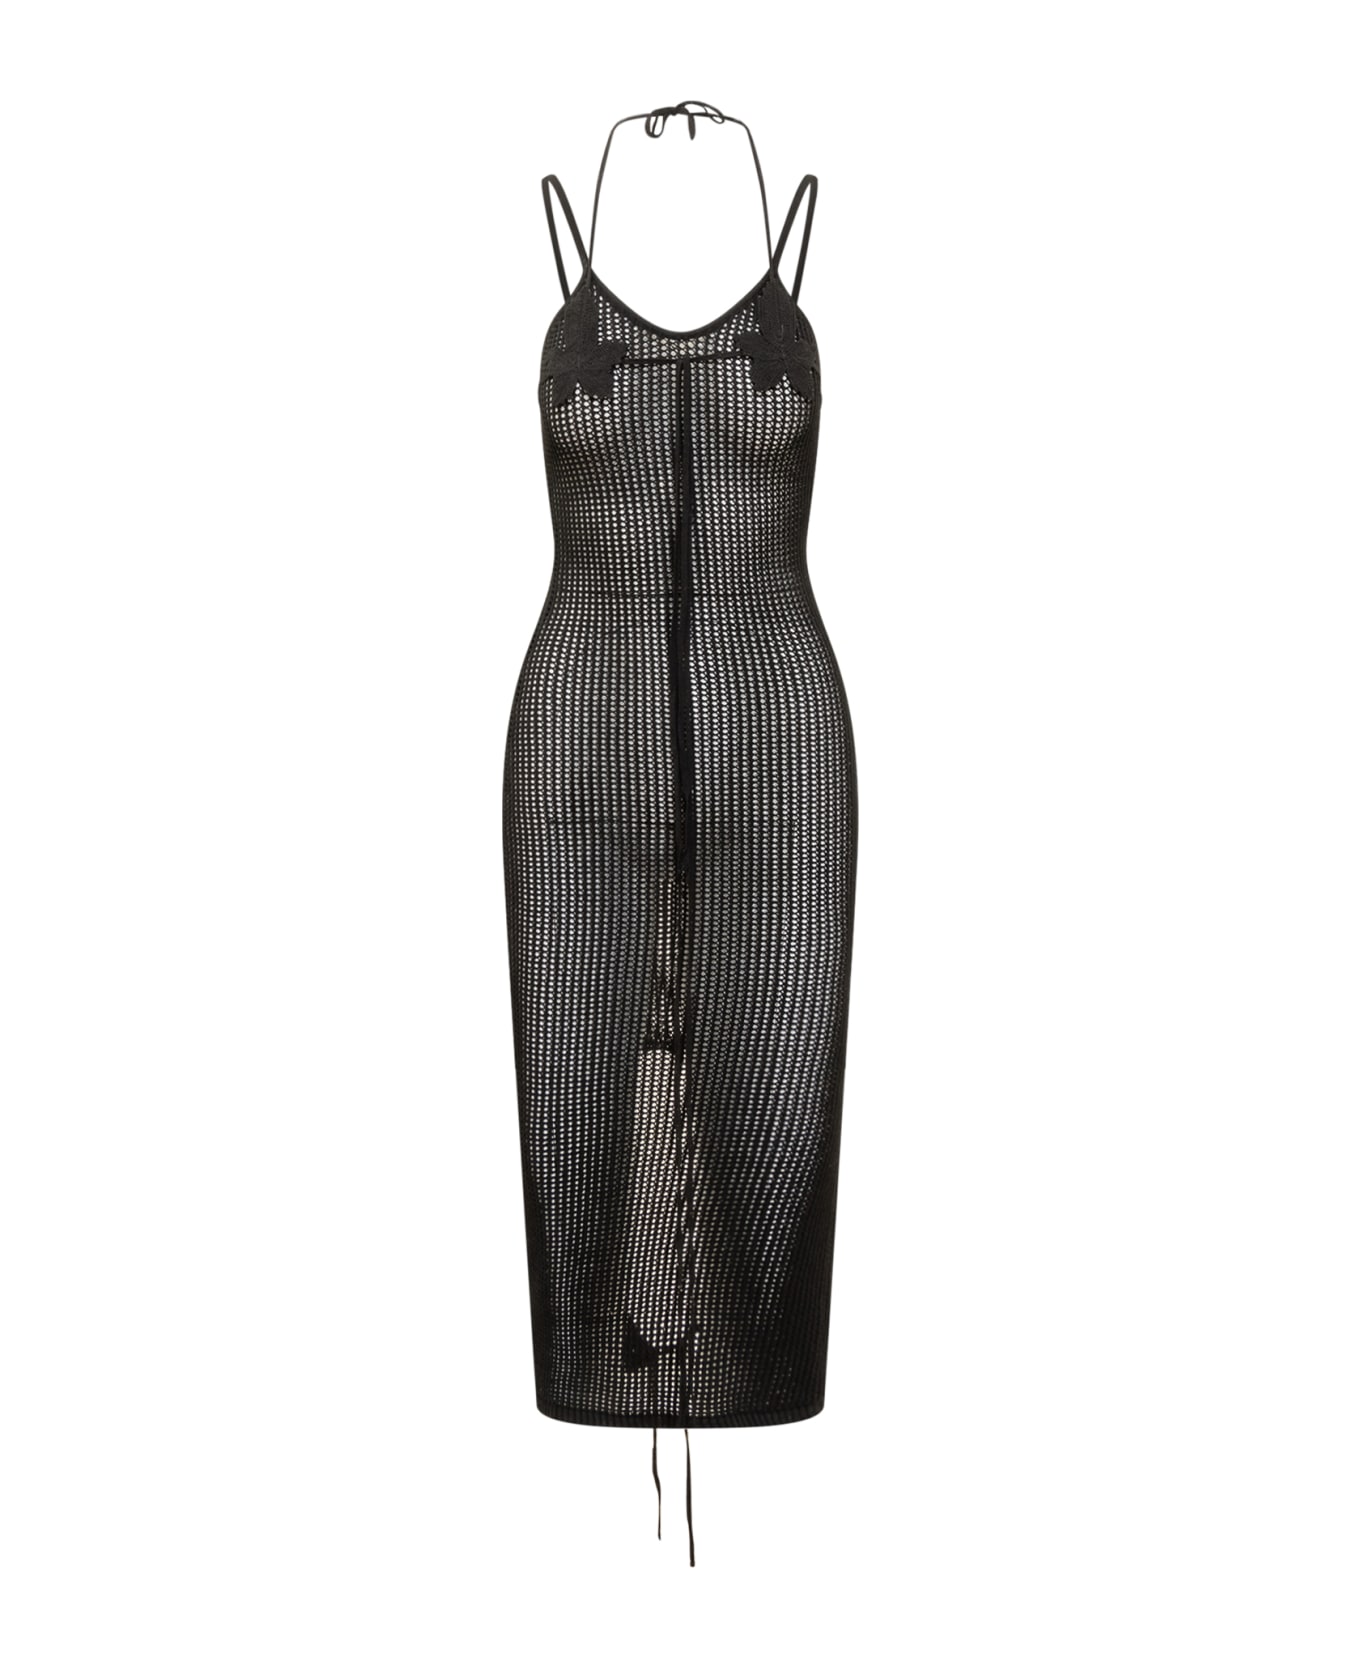 ANDREĀDAMO Fishnet Midi Dress - BLACK